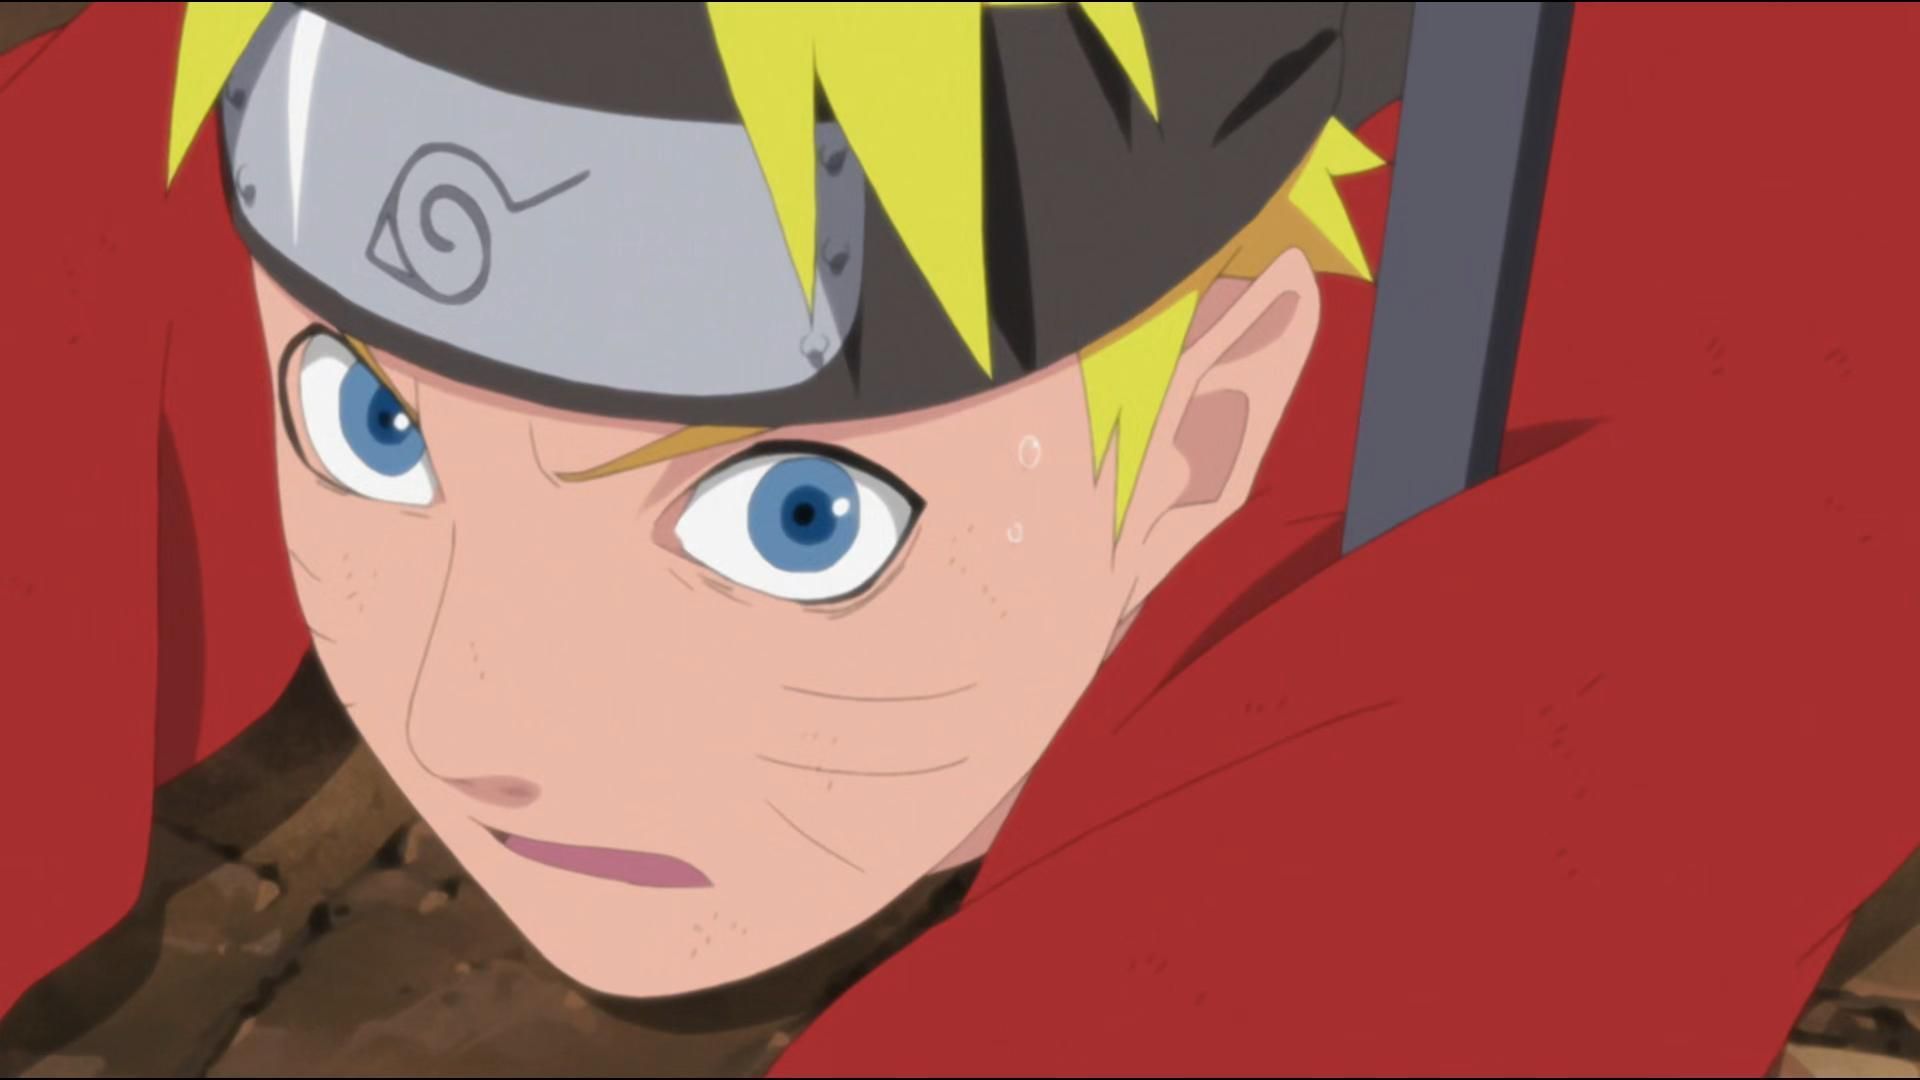 Naruto as seen in the Naruto anime series (Image via Pierrot)